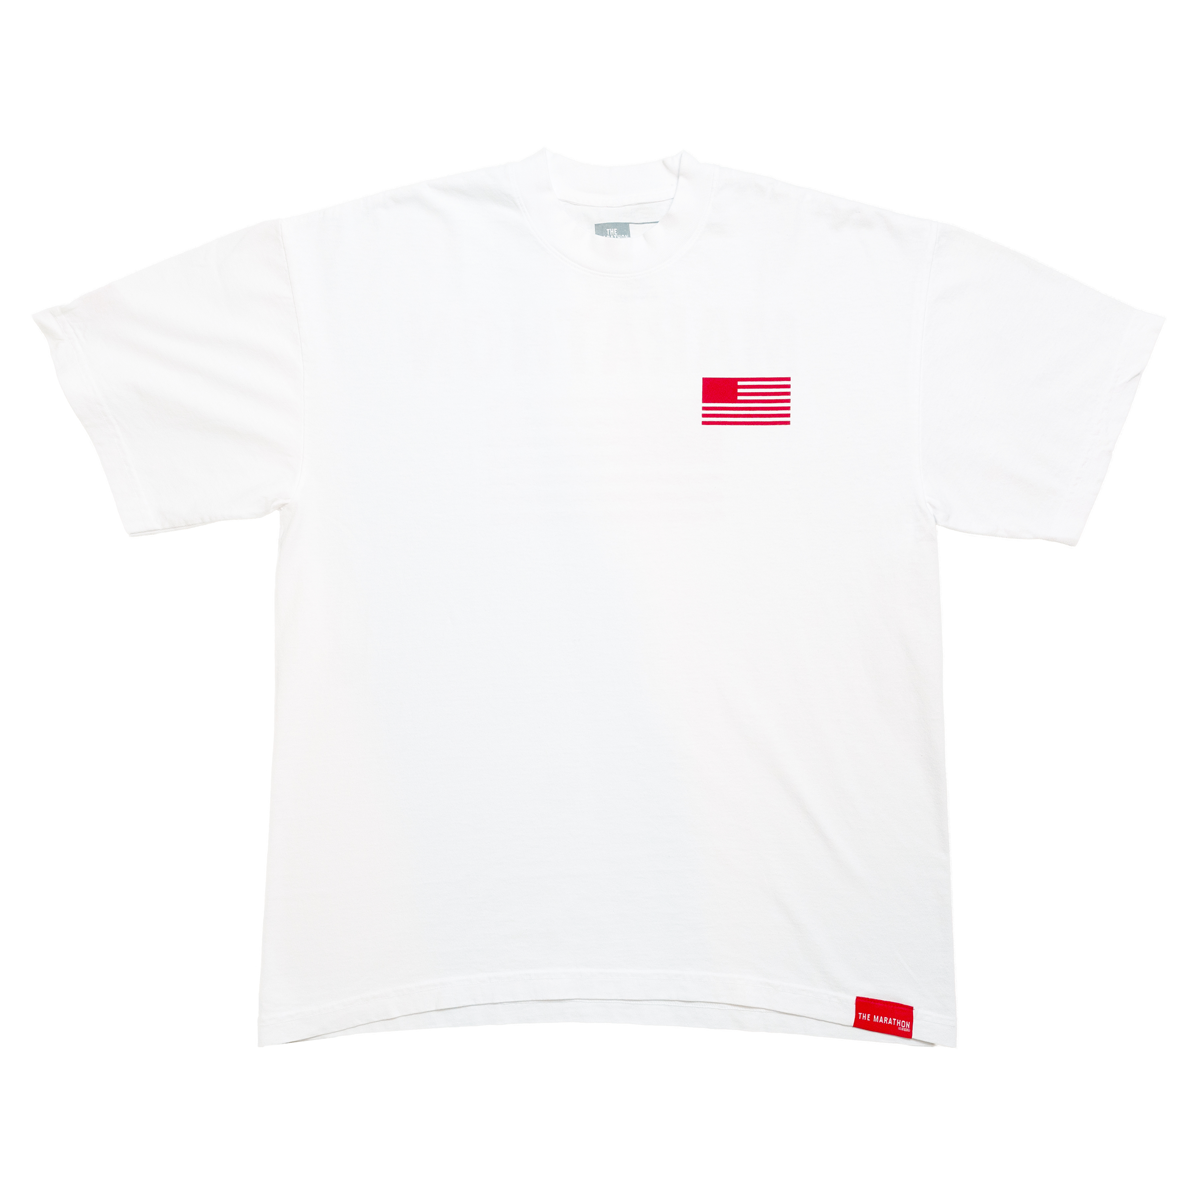 TMC Color Block Flag T-shirt - White/Red-The Marathon Clothing